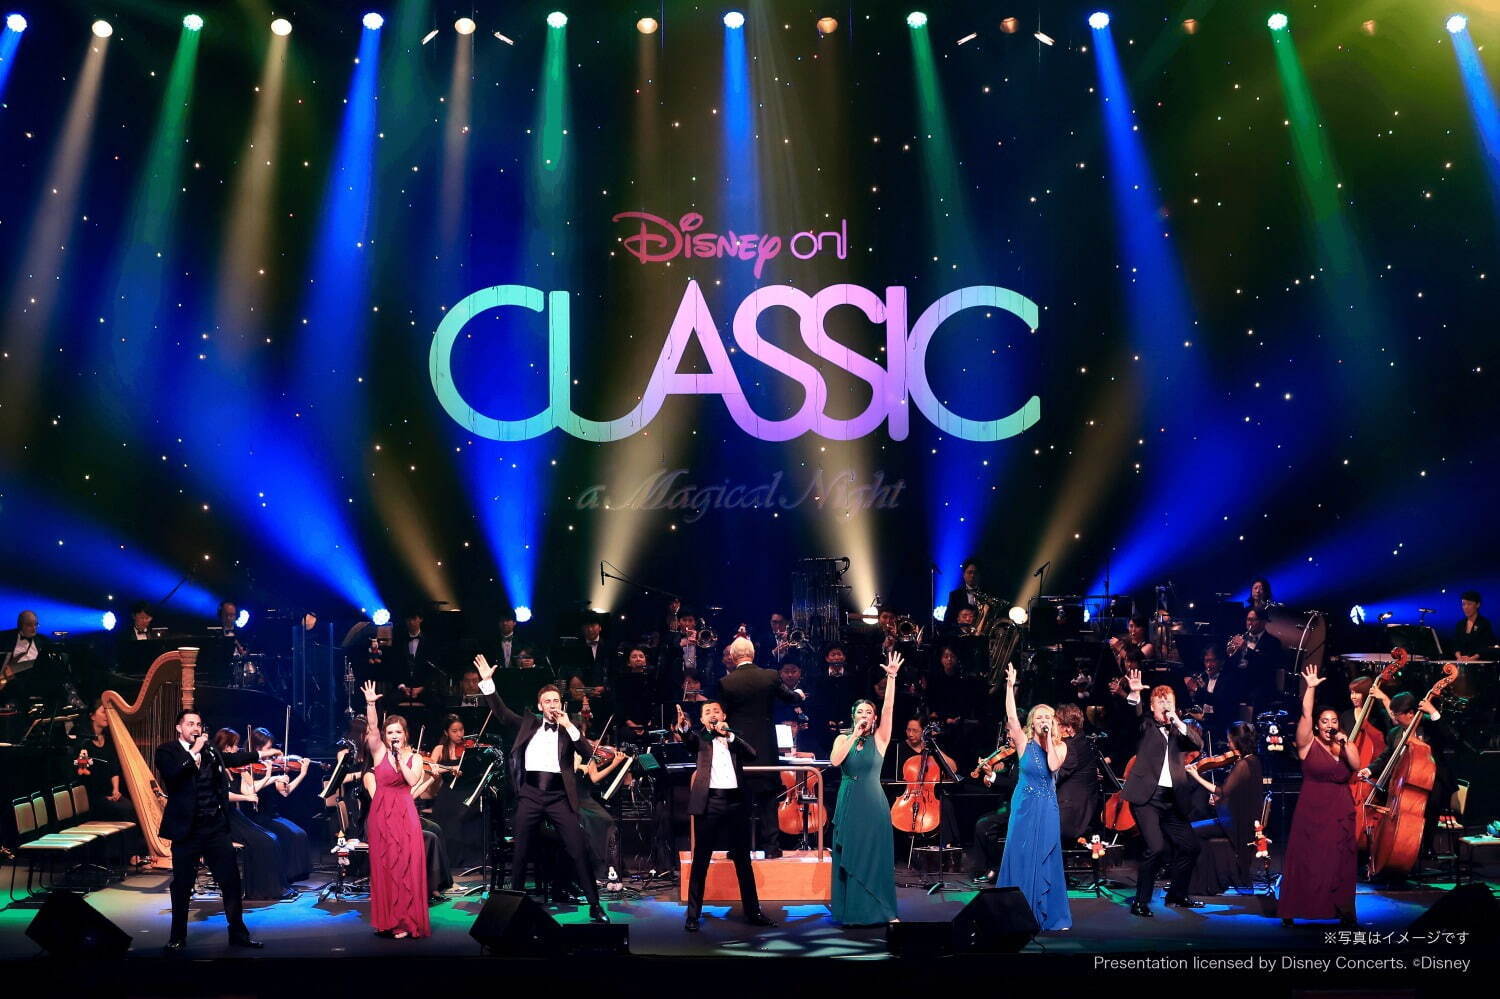 Presentation licensed by Disney Concerts. ©Disney